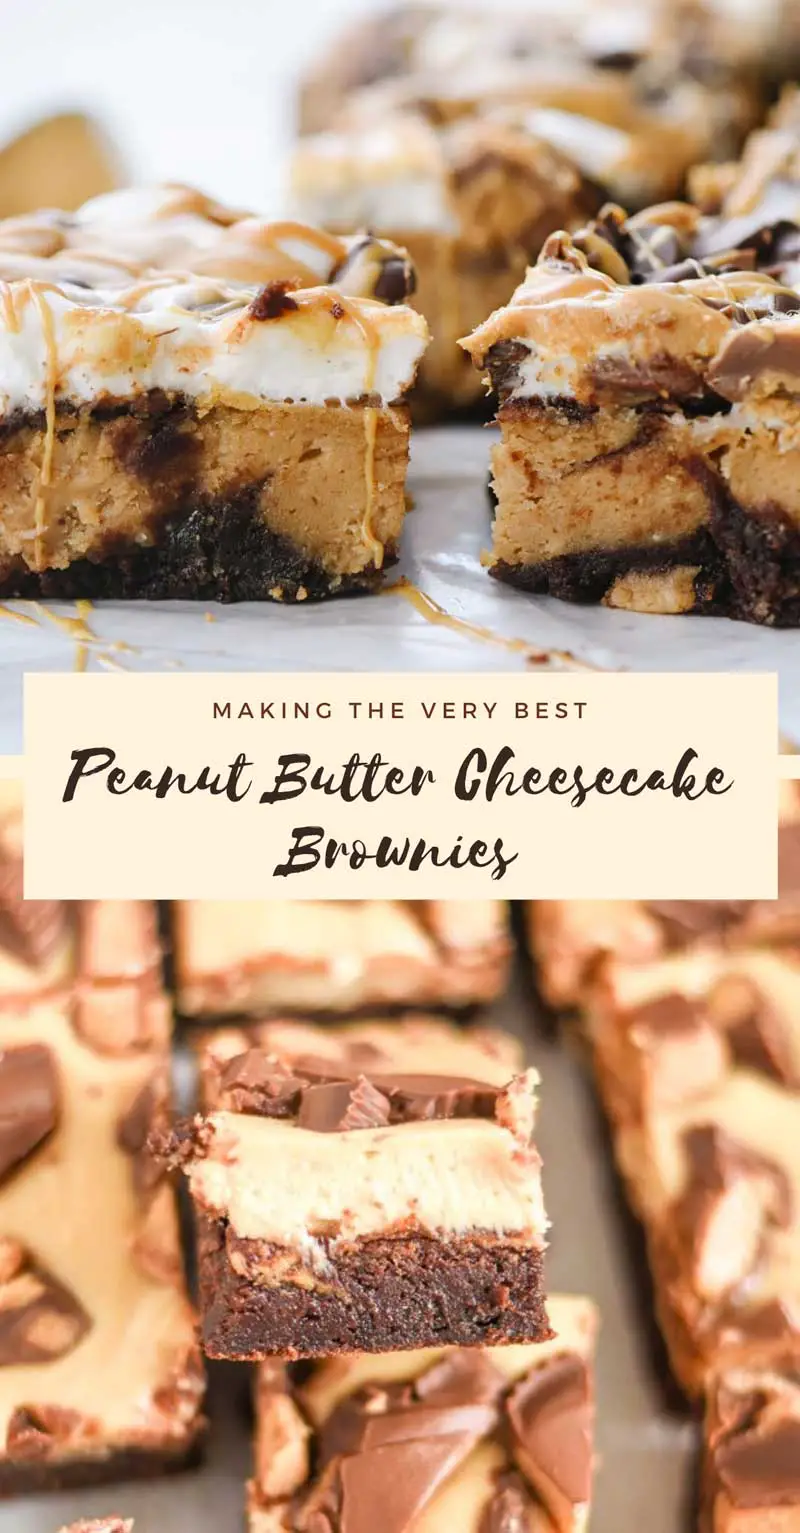 Peanut Butter Cheesecake Brownies Recipes Ideas Pinterest